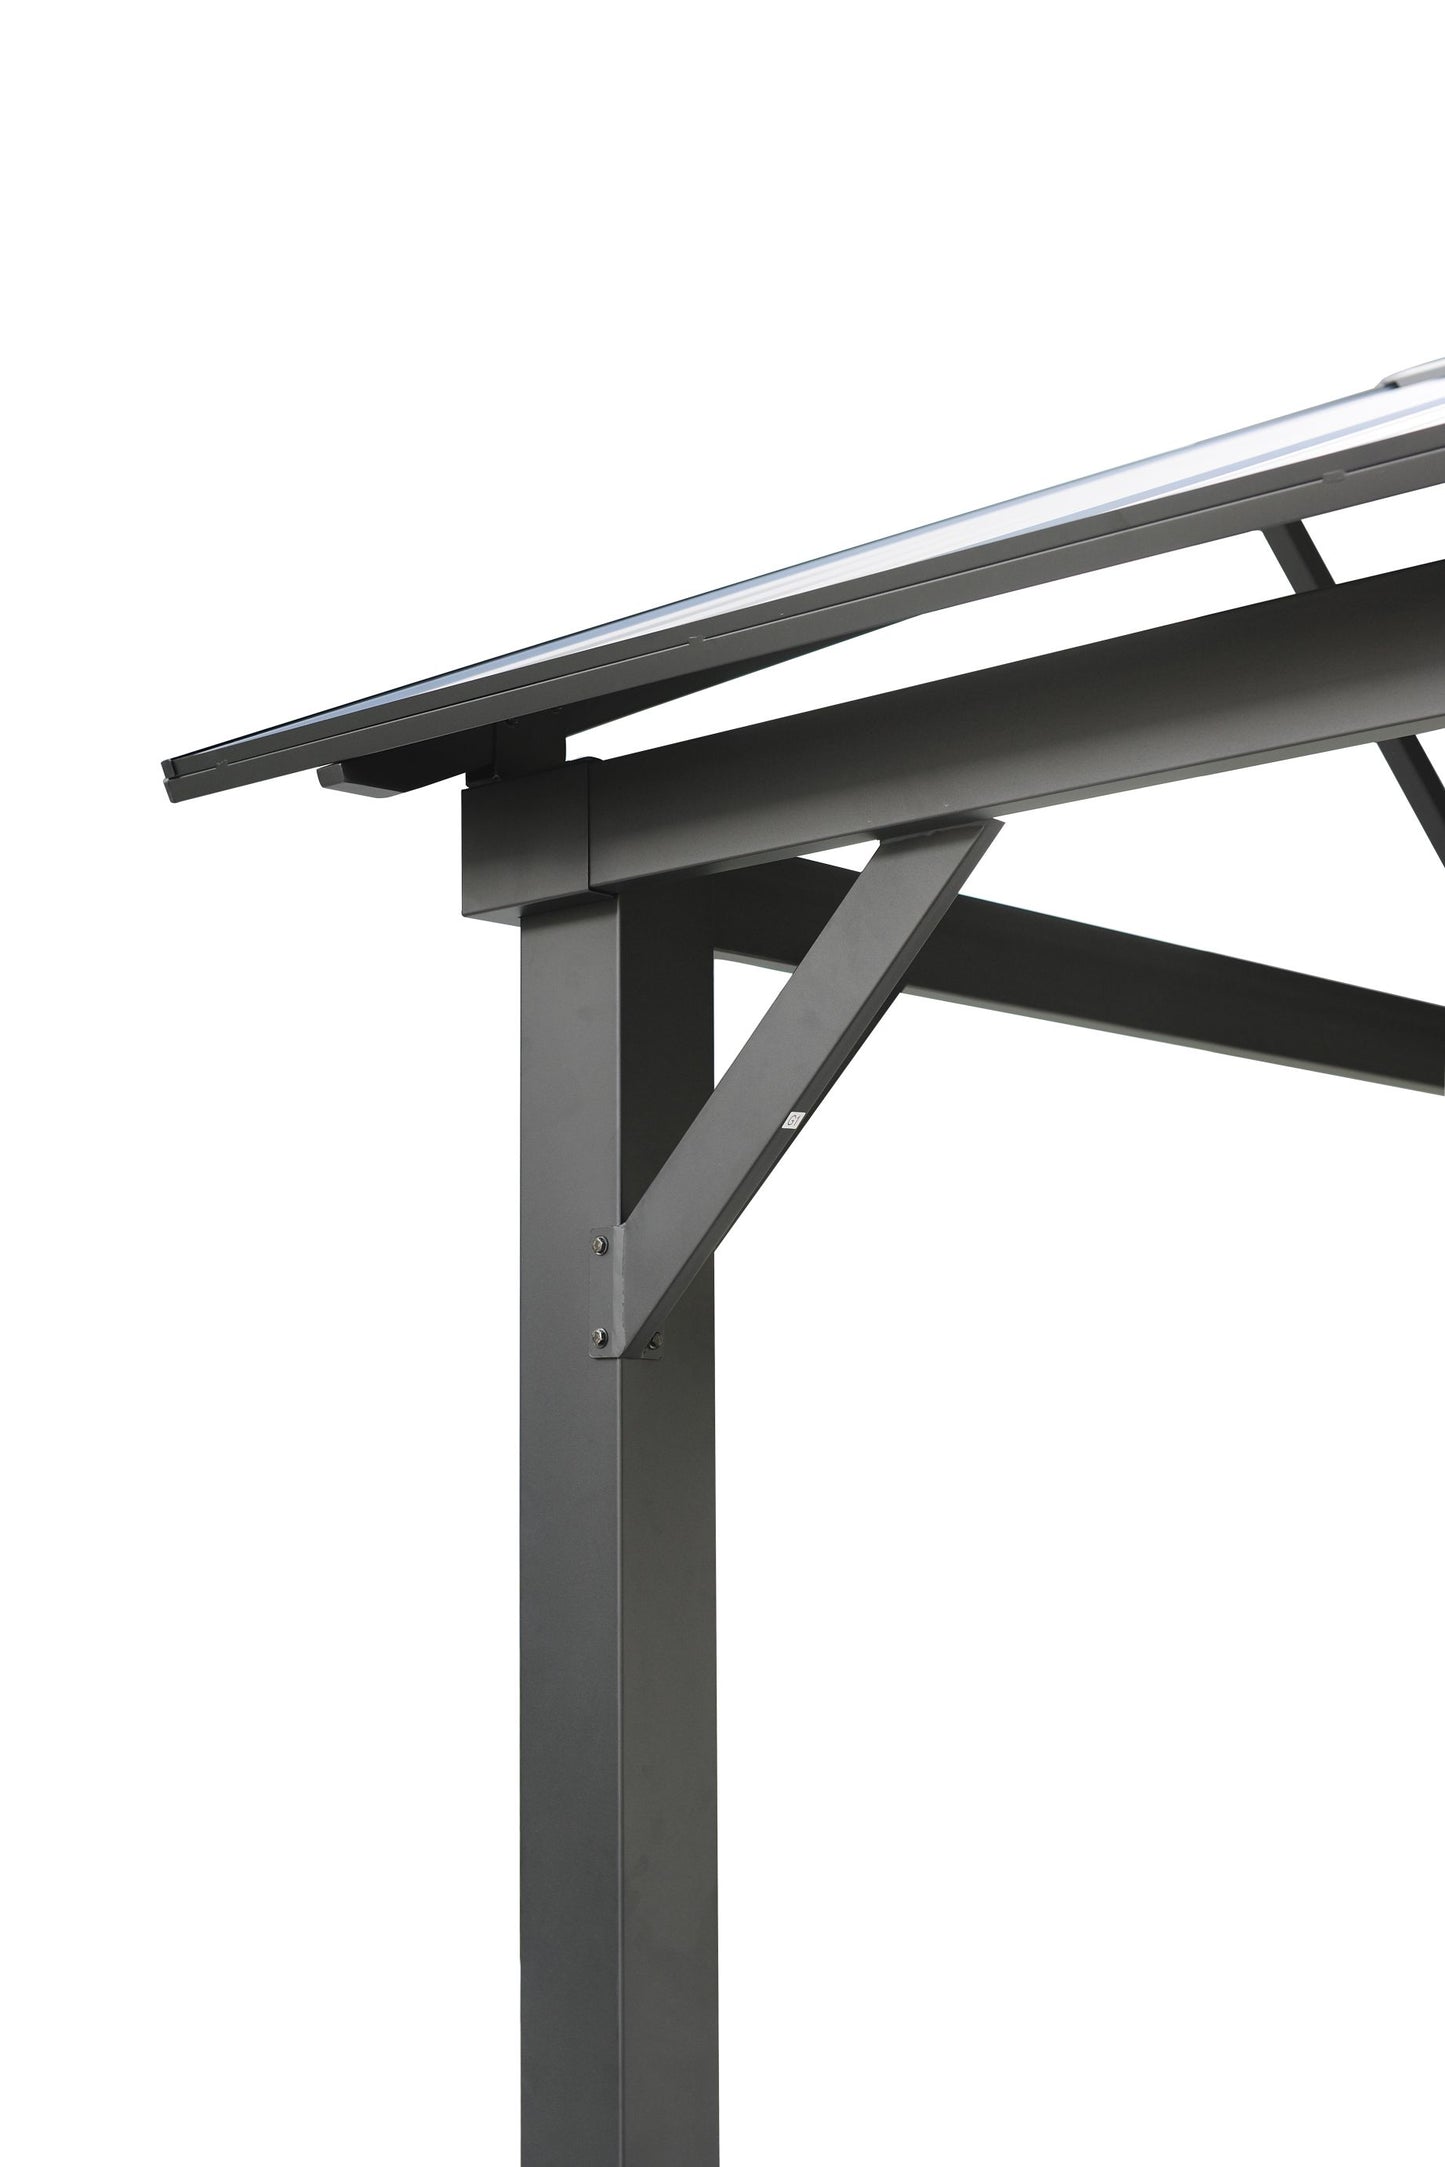 GazeboMate 3.66m x 6.1m  Galvanized Steel Hardtop Gazebo with Sleek Aluminum Legs | Black Powdercoated